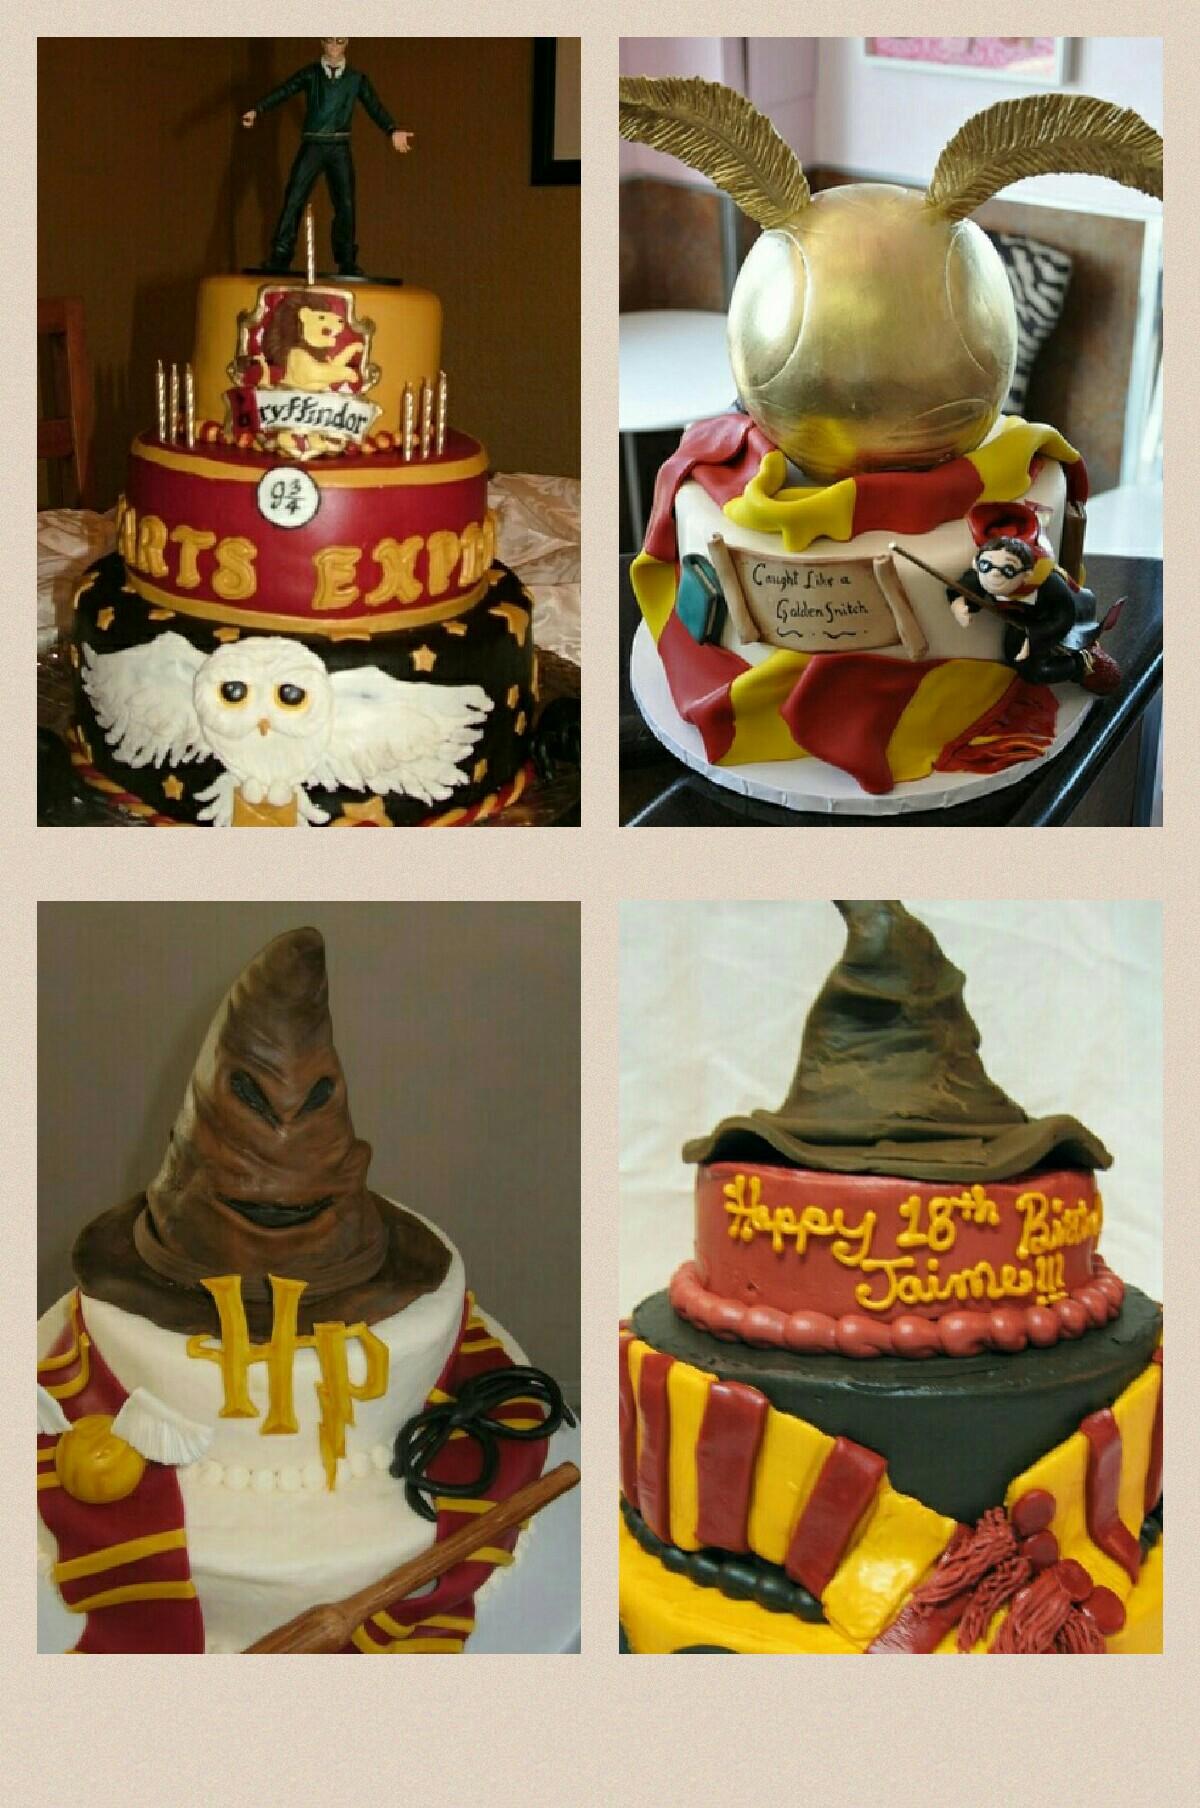 Amazing Harry Potter cakes!!!😘
#pottercakes